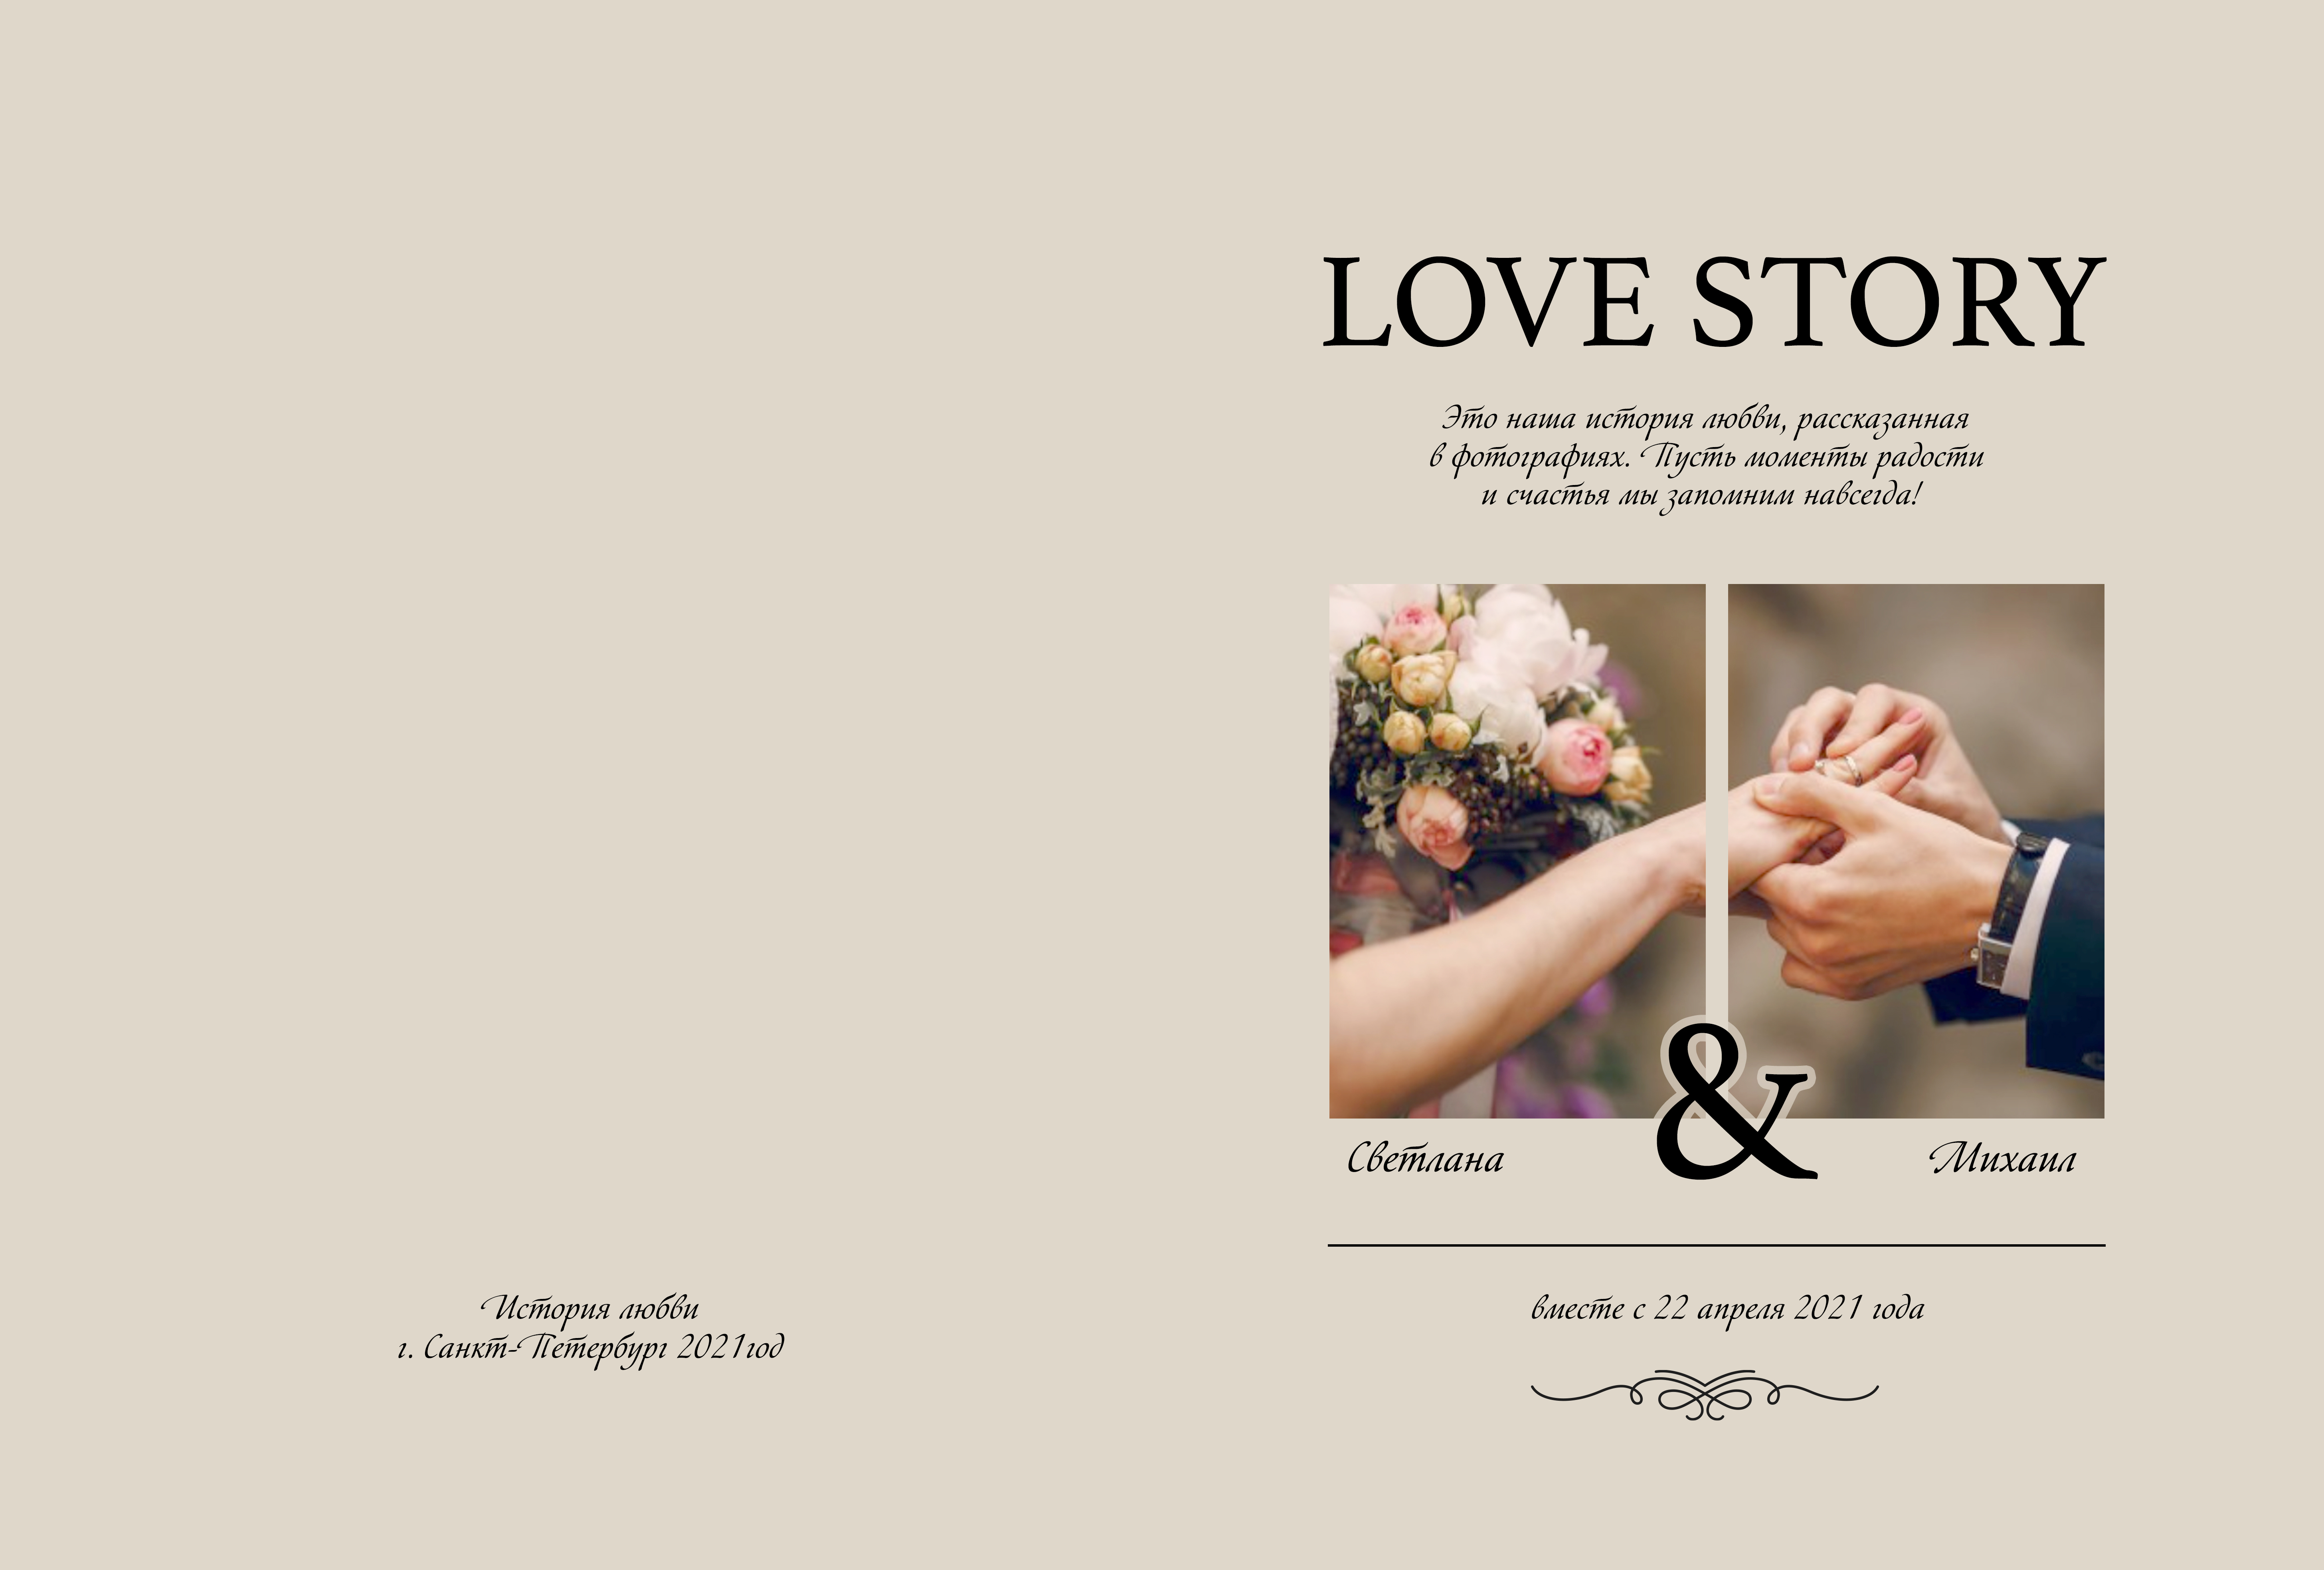 Истории о любви навигация. Фотокниги Love story. Love story обложка. Шаблон для верстки фотокниги. Любовный фотоальбом.